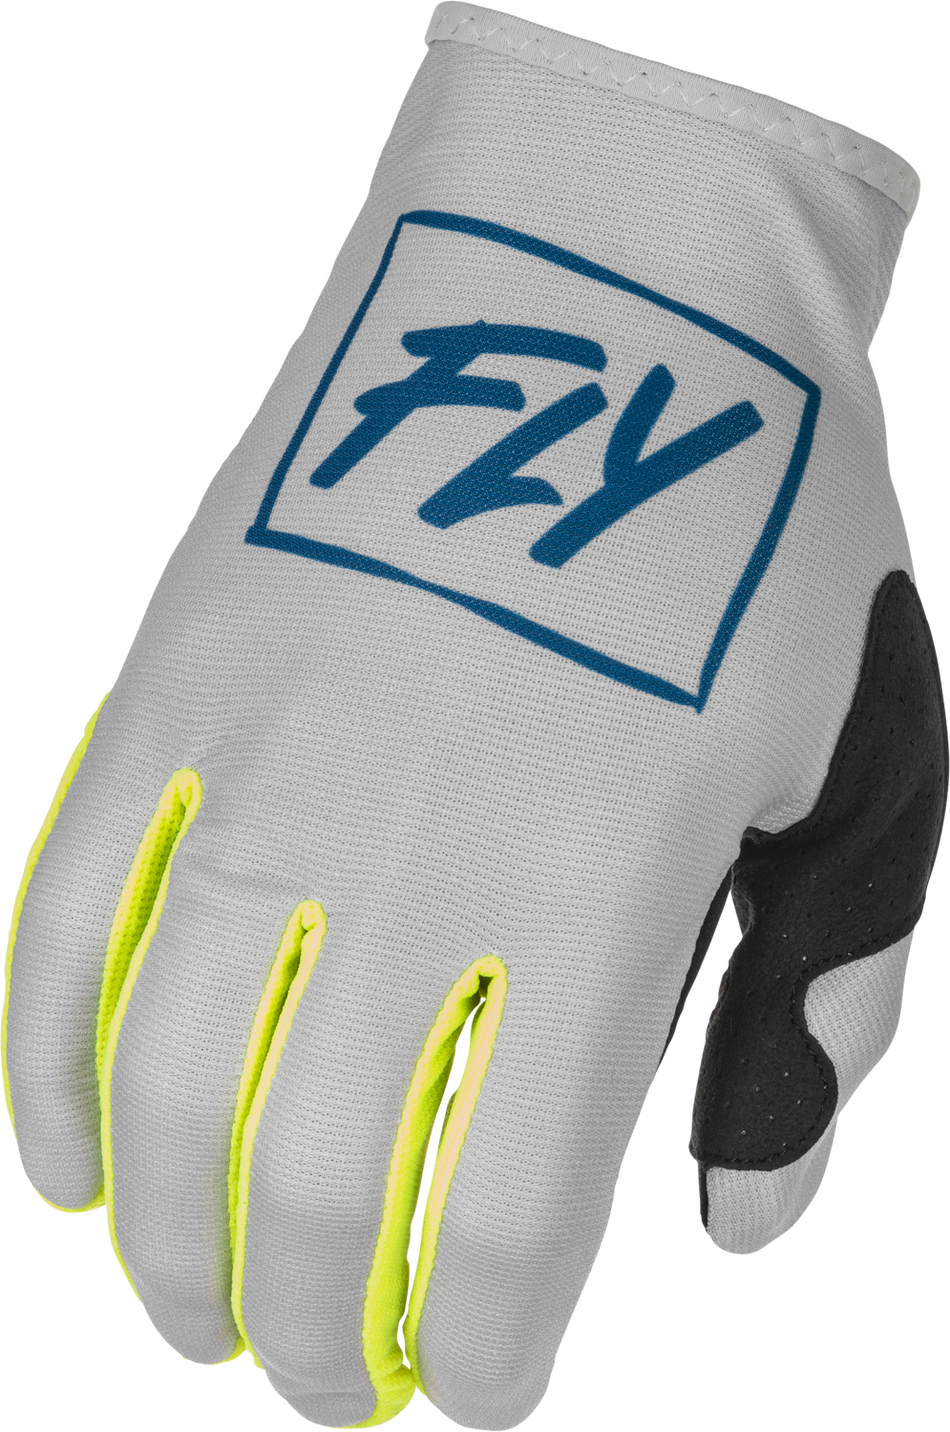 FLY RACING Lite Gloves Grey/Teal/Hi-Vis Sm 375-711S